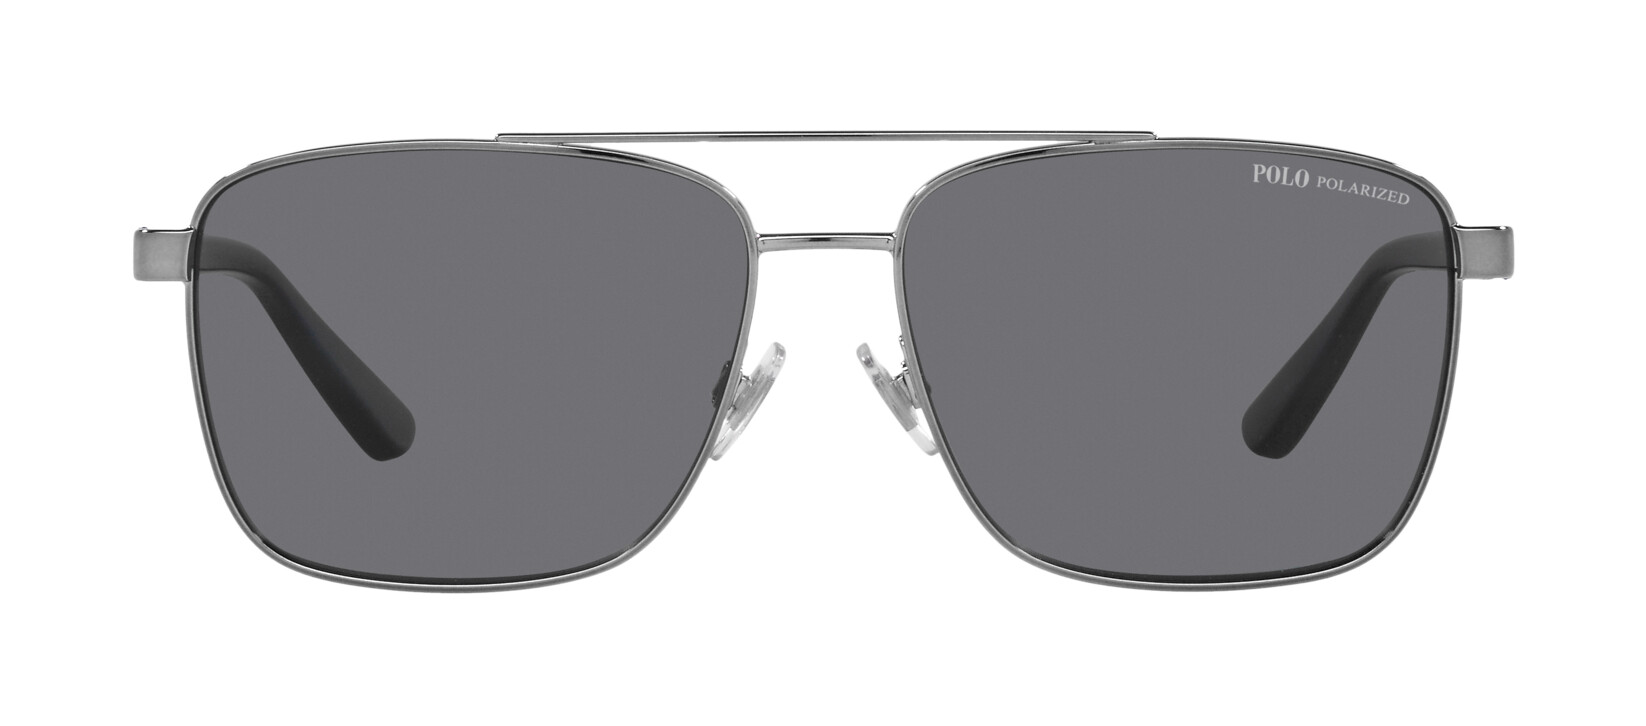 [products.image.front] Polo Ralph Lauren 0PH3137 900281 Sonnenbrille